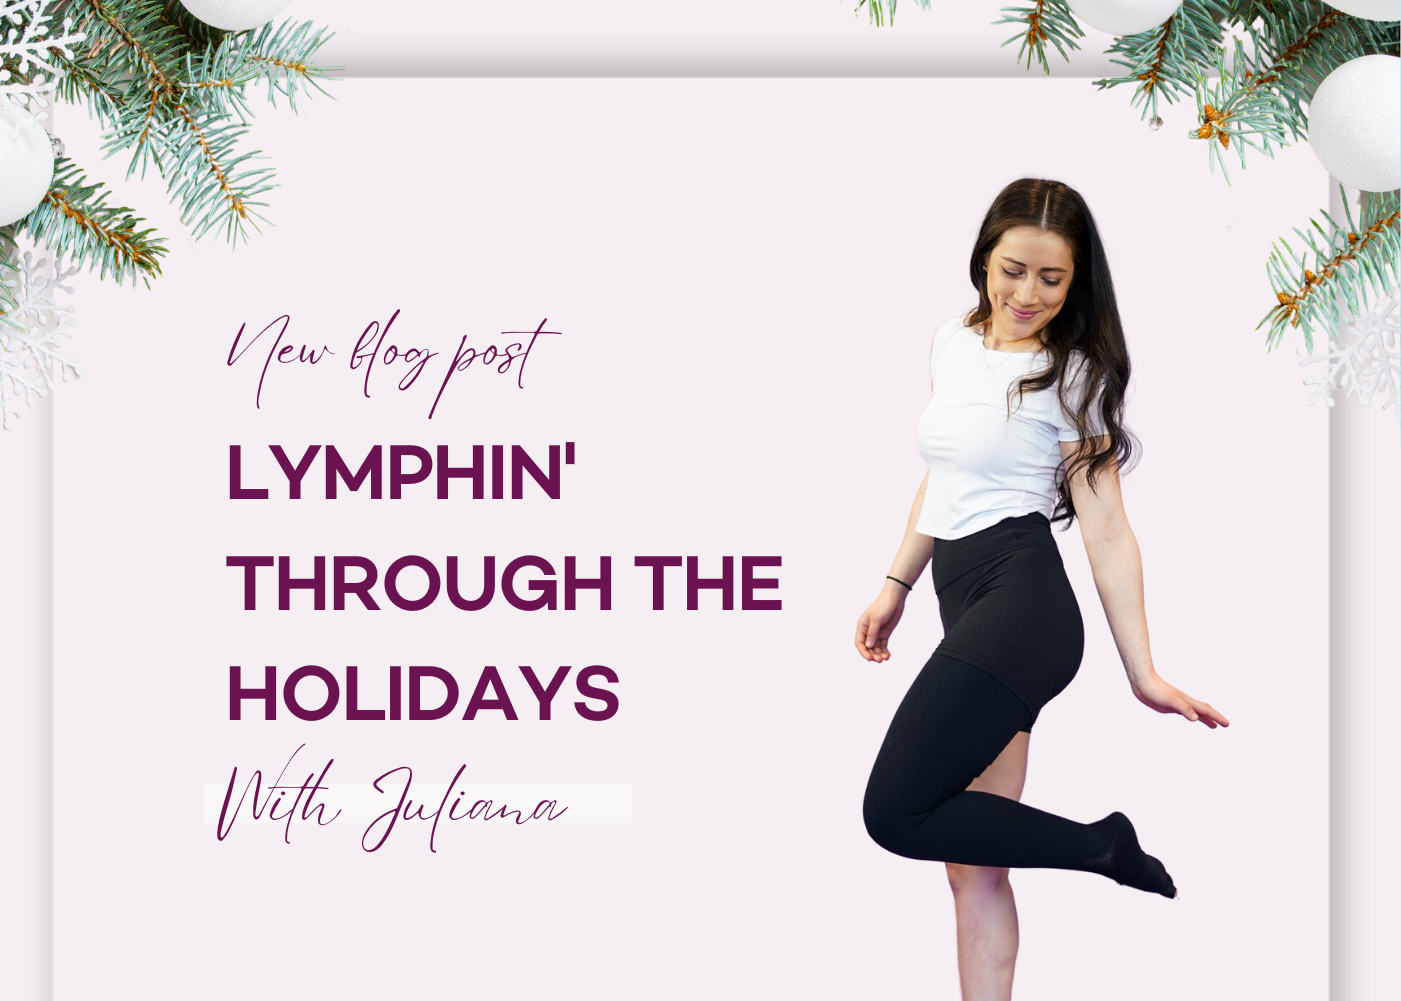 Lymphin' through the holidays